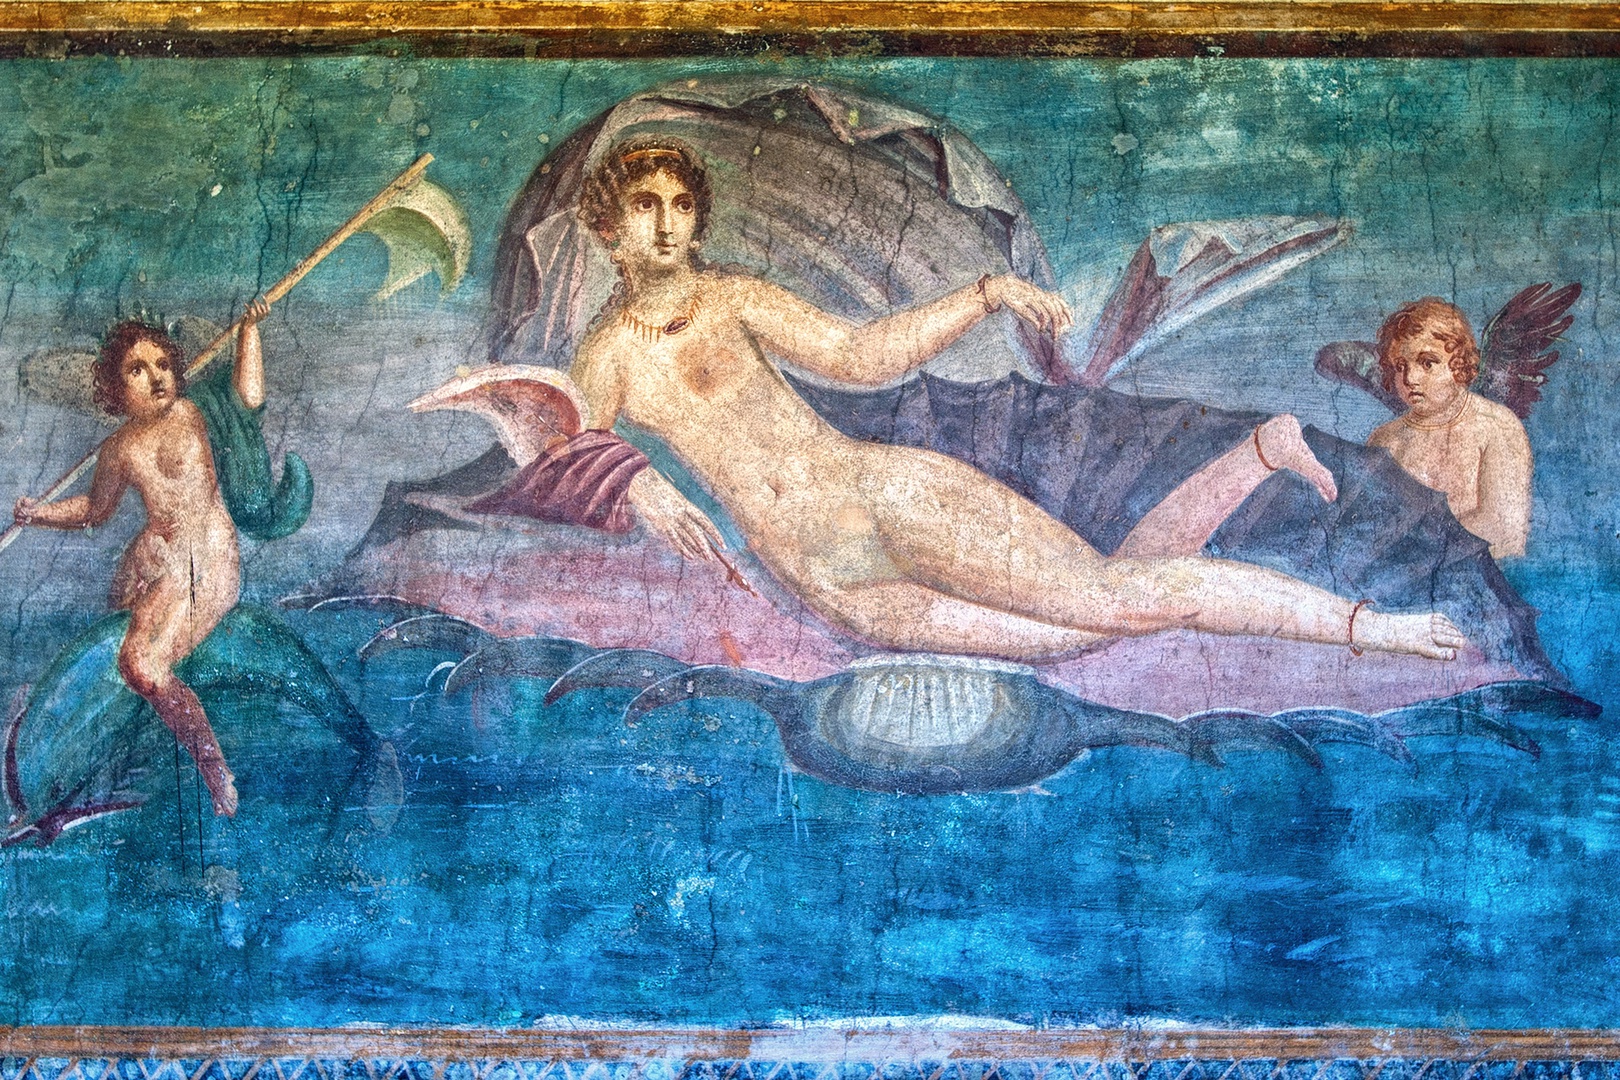 Beautiful Roman frescoes at Pompeii.